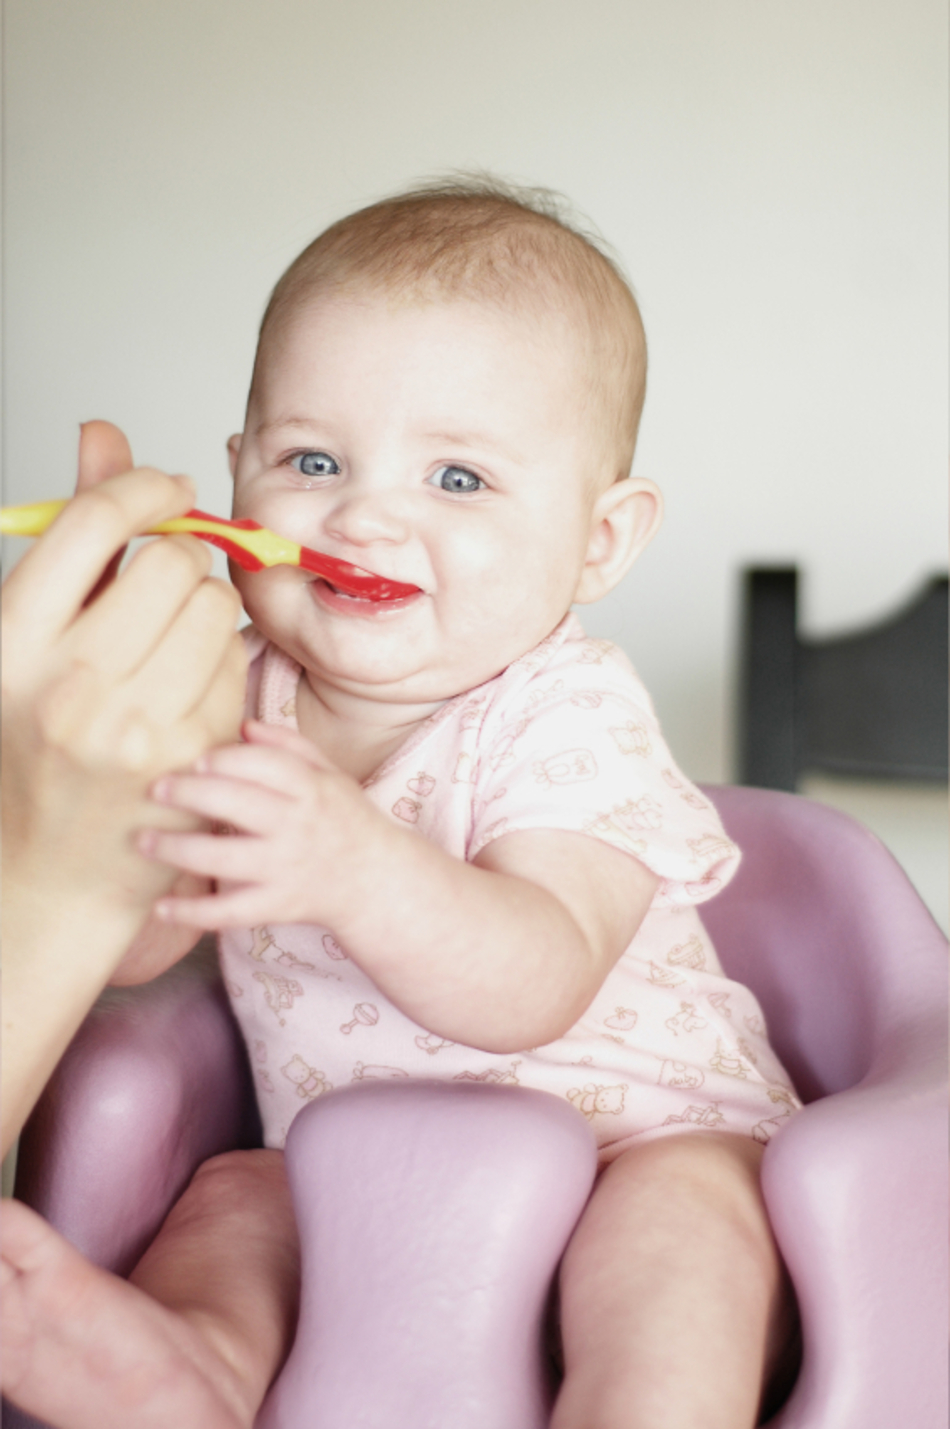 Baby Food Basics